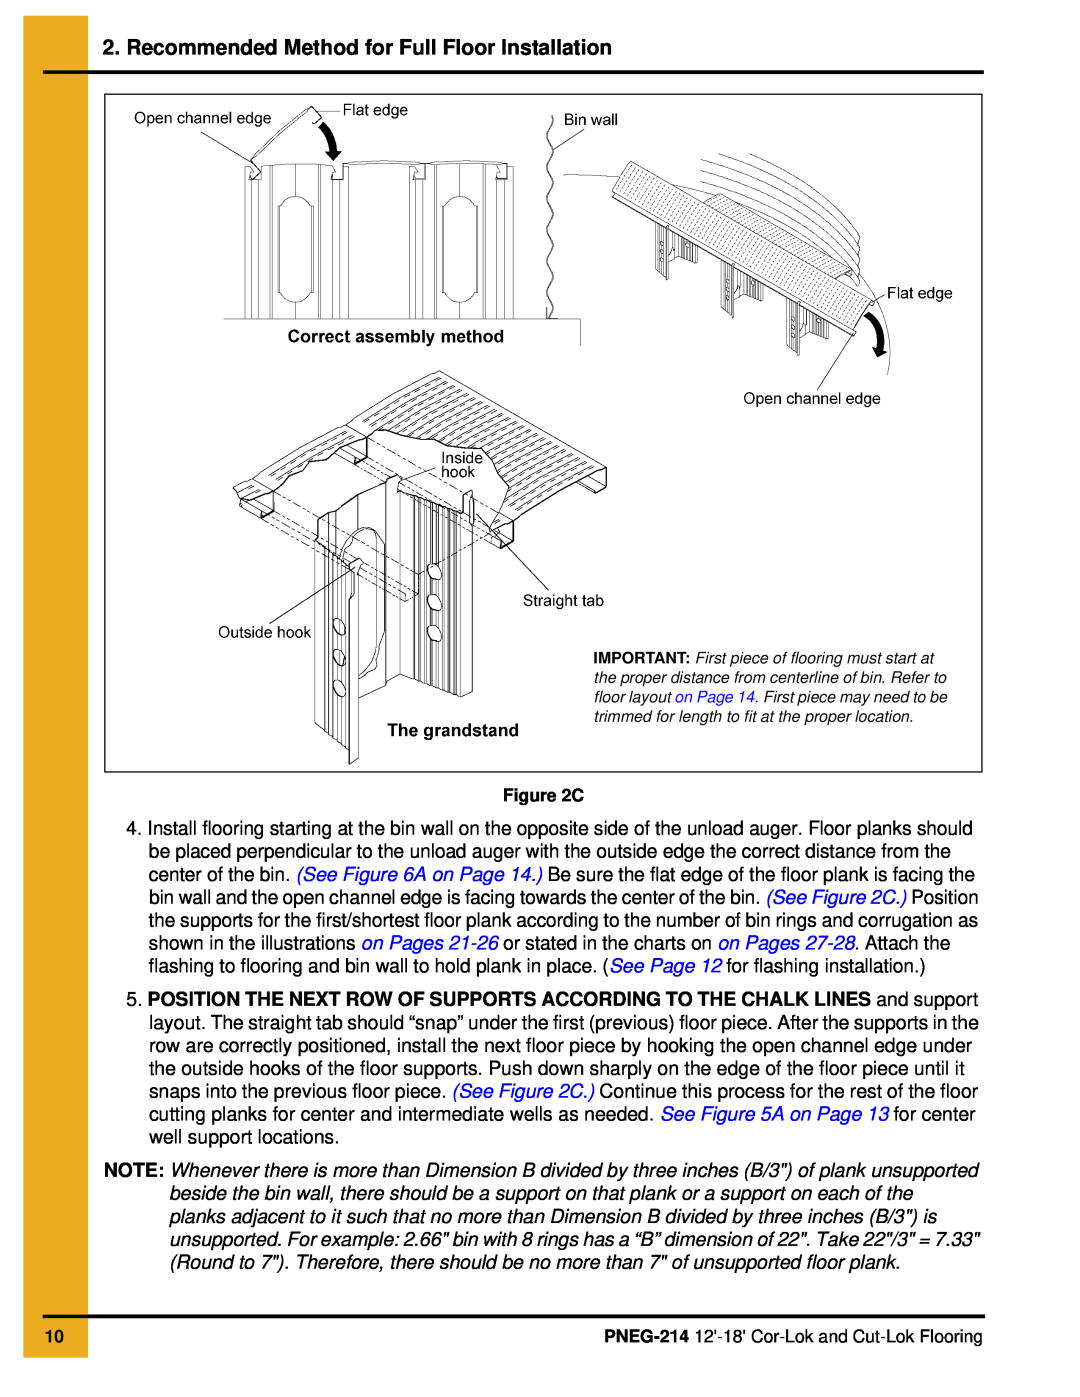 GSI Outdoors PNEG-214 installation manual Recommended Method for Full Floor Installation, C 